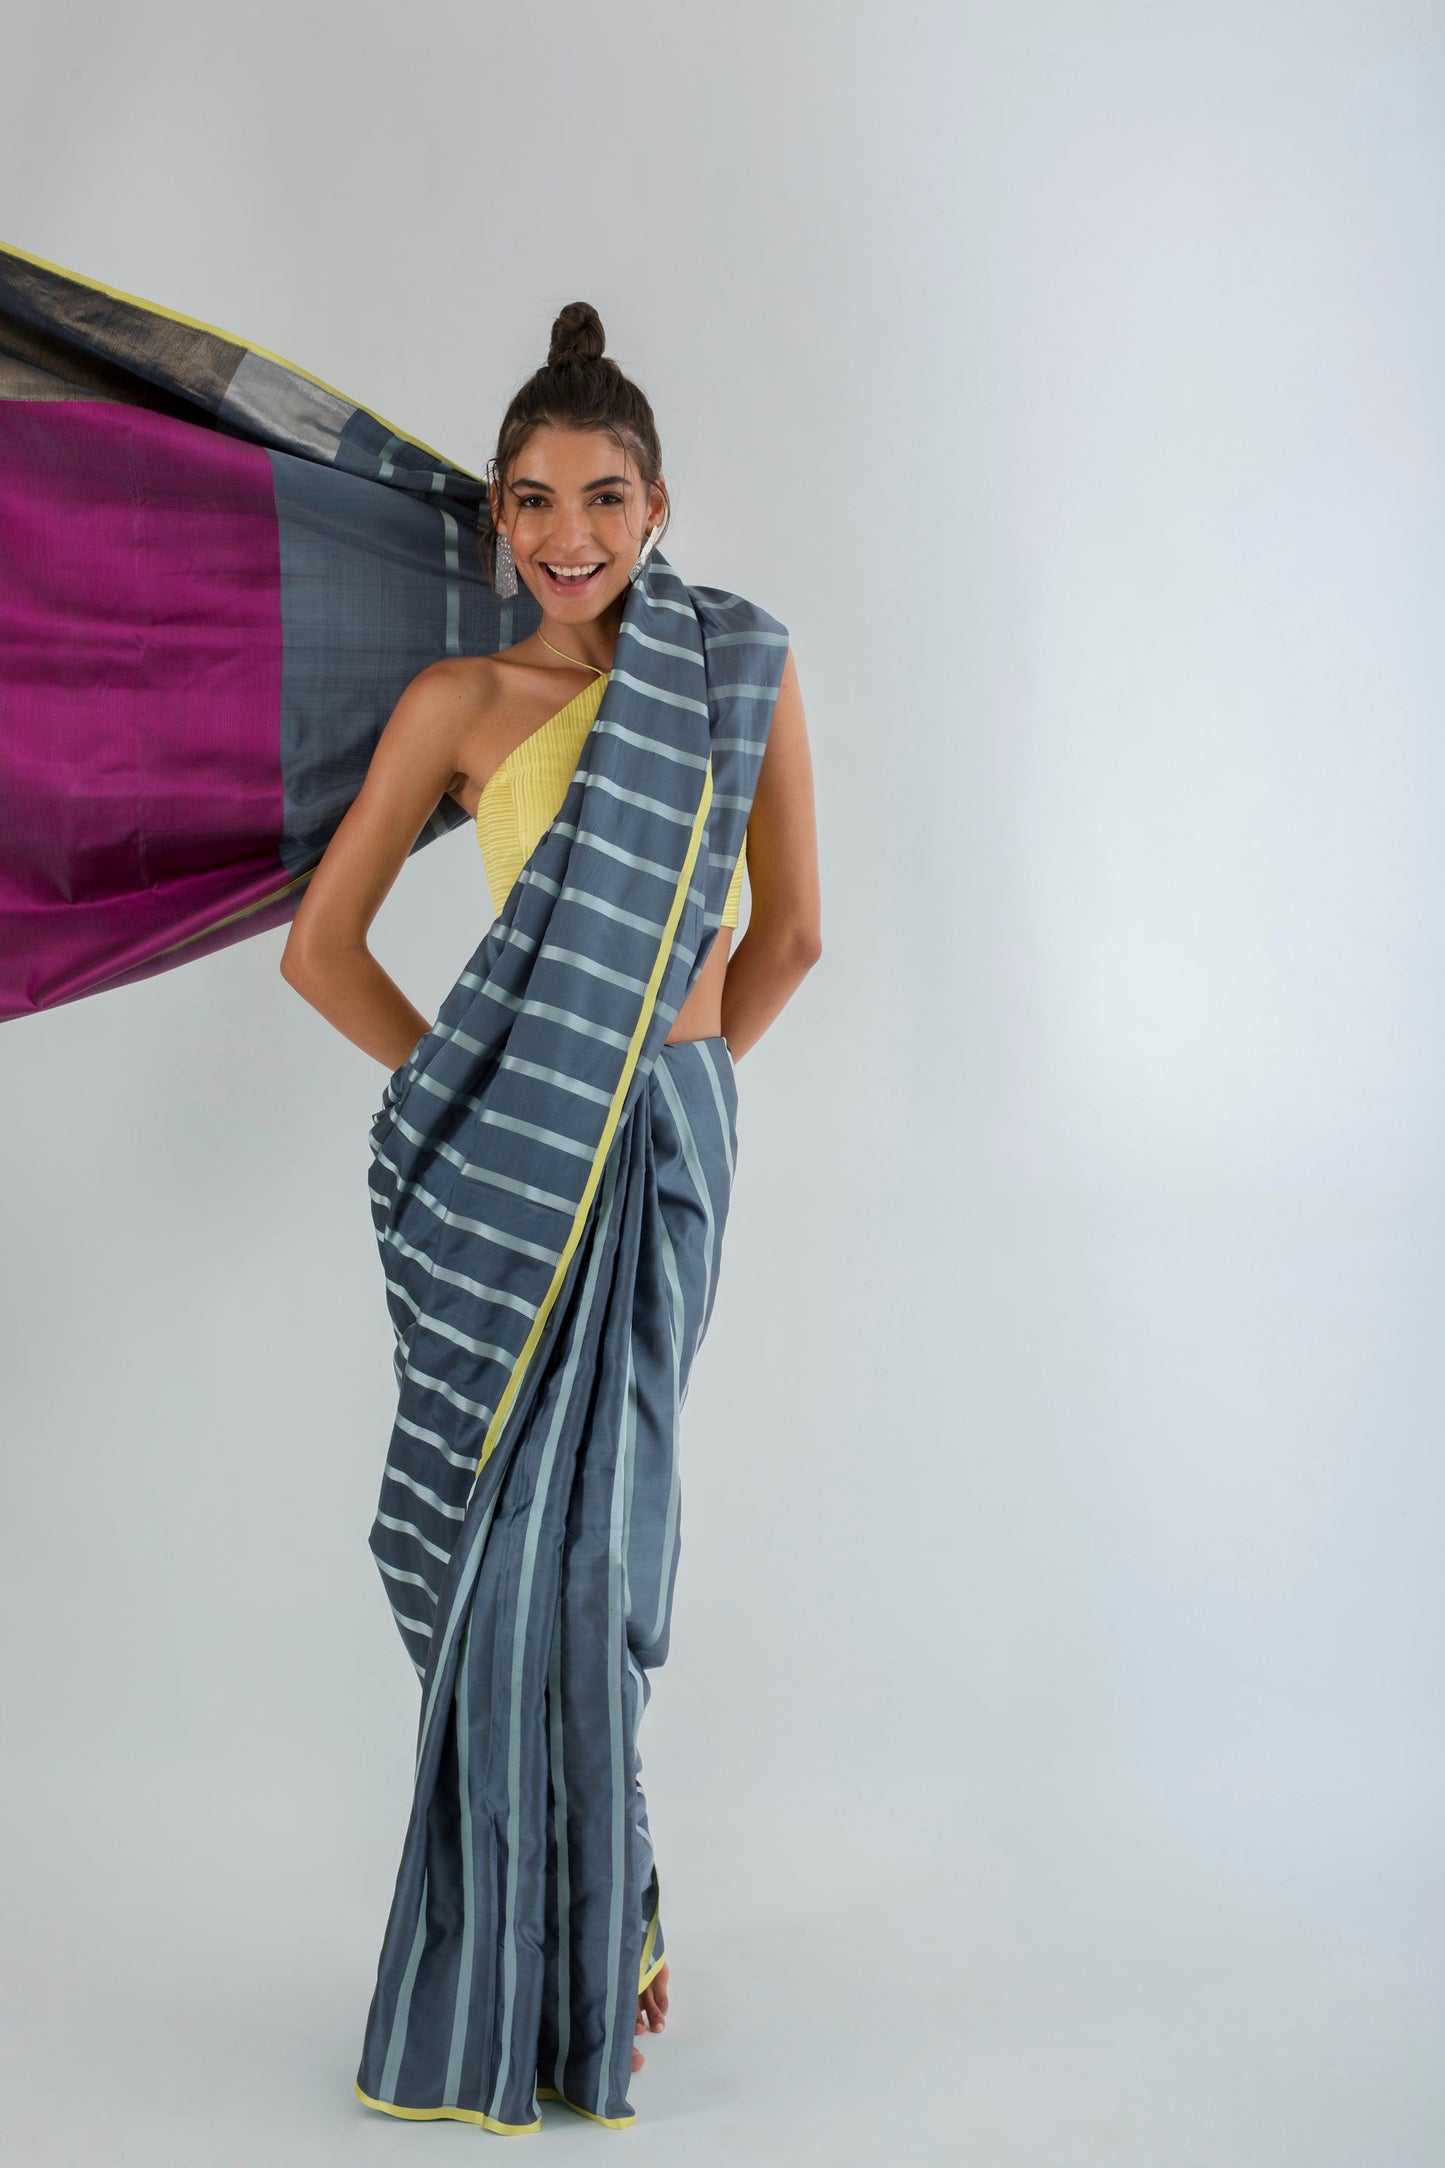 Dapple Gray Colorblock Sari